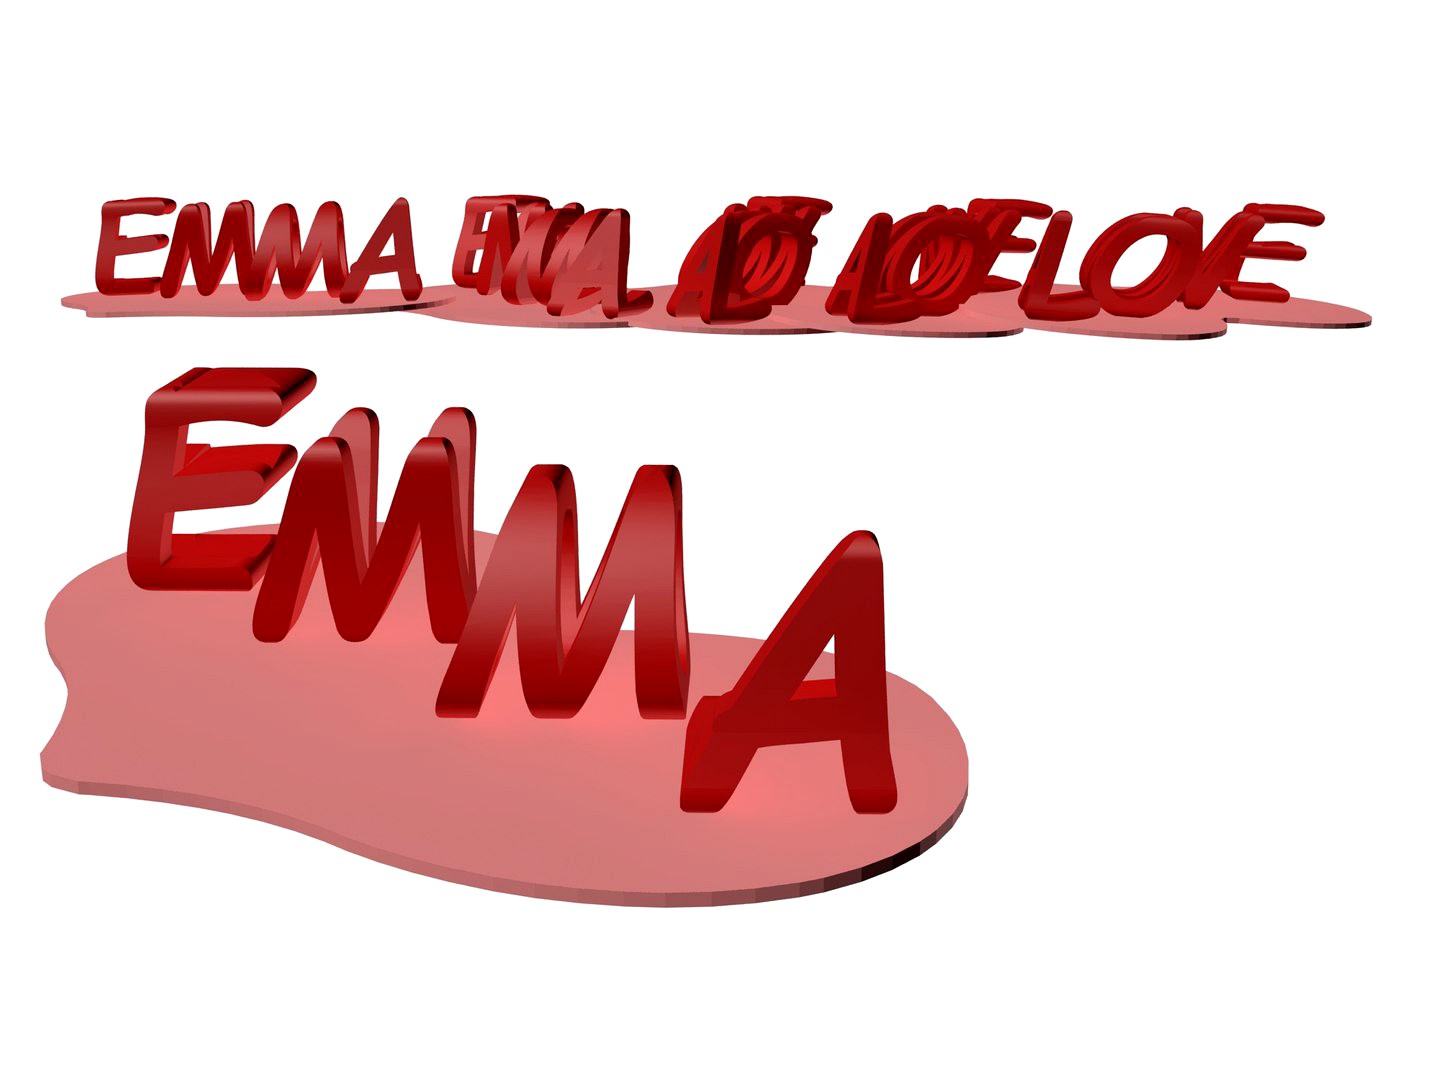 Emma words.